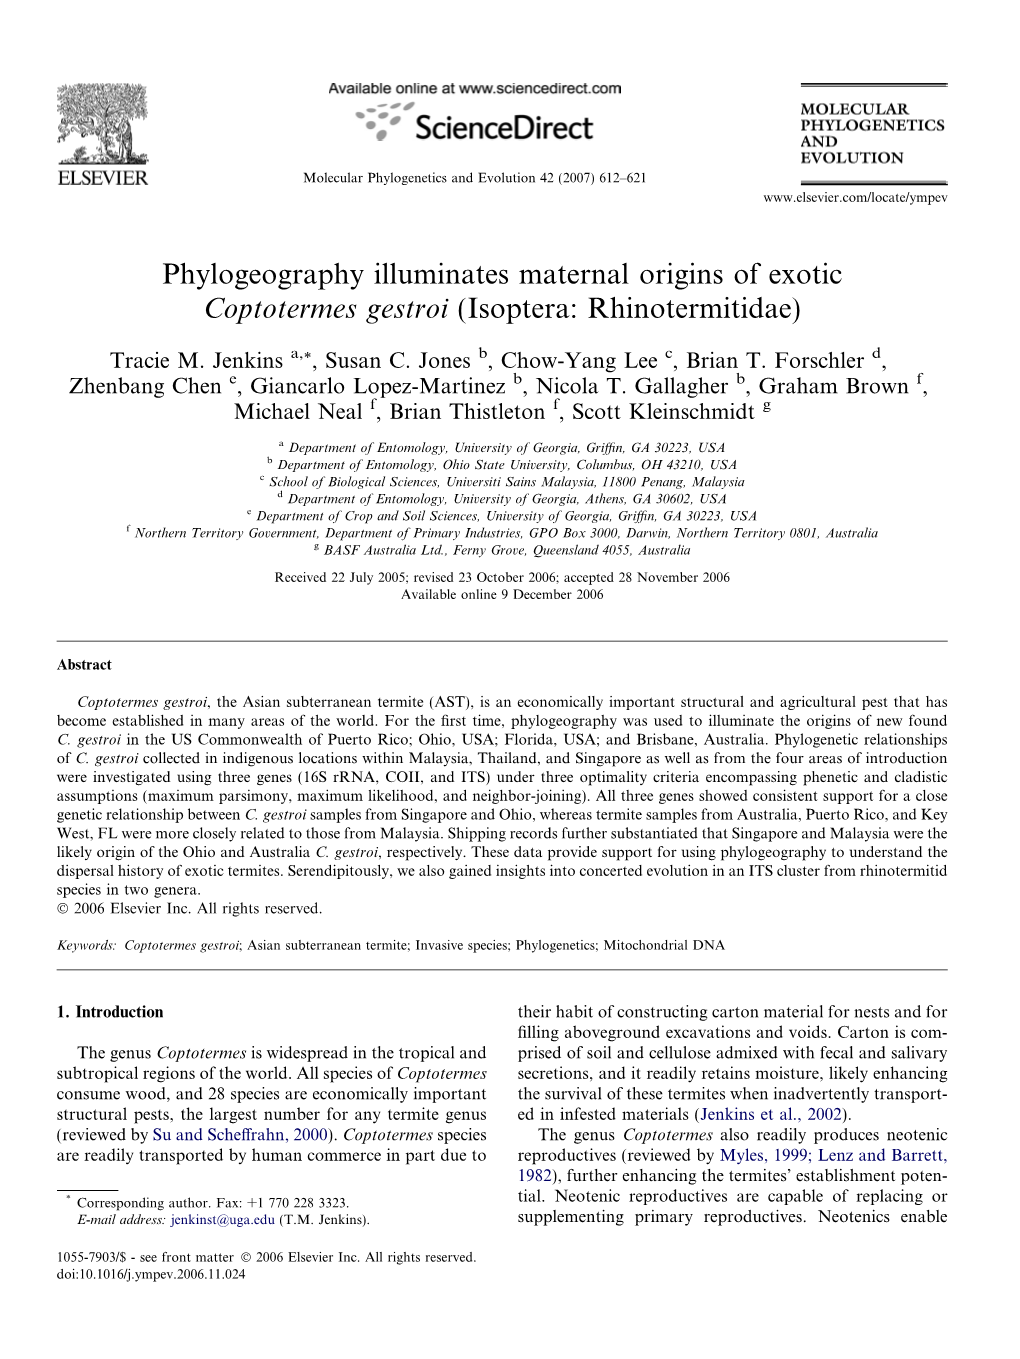 Phylogeography Illuminates Maternal Origins of Exotic Coptotermes Gestroi (Isoptera: Rhinotermitidae)